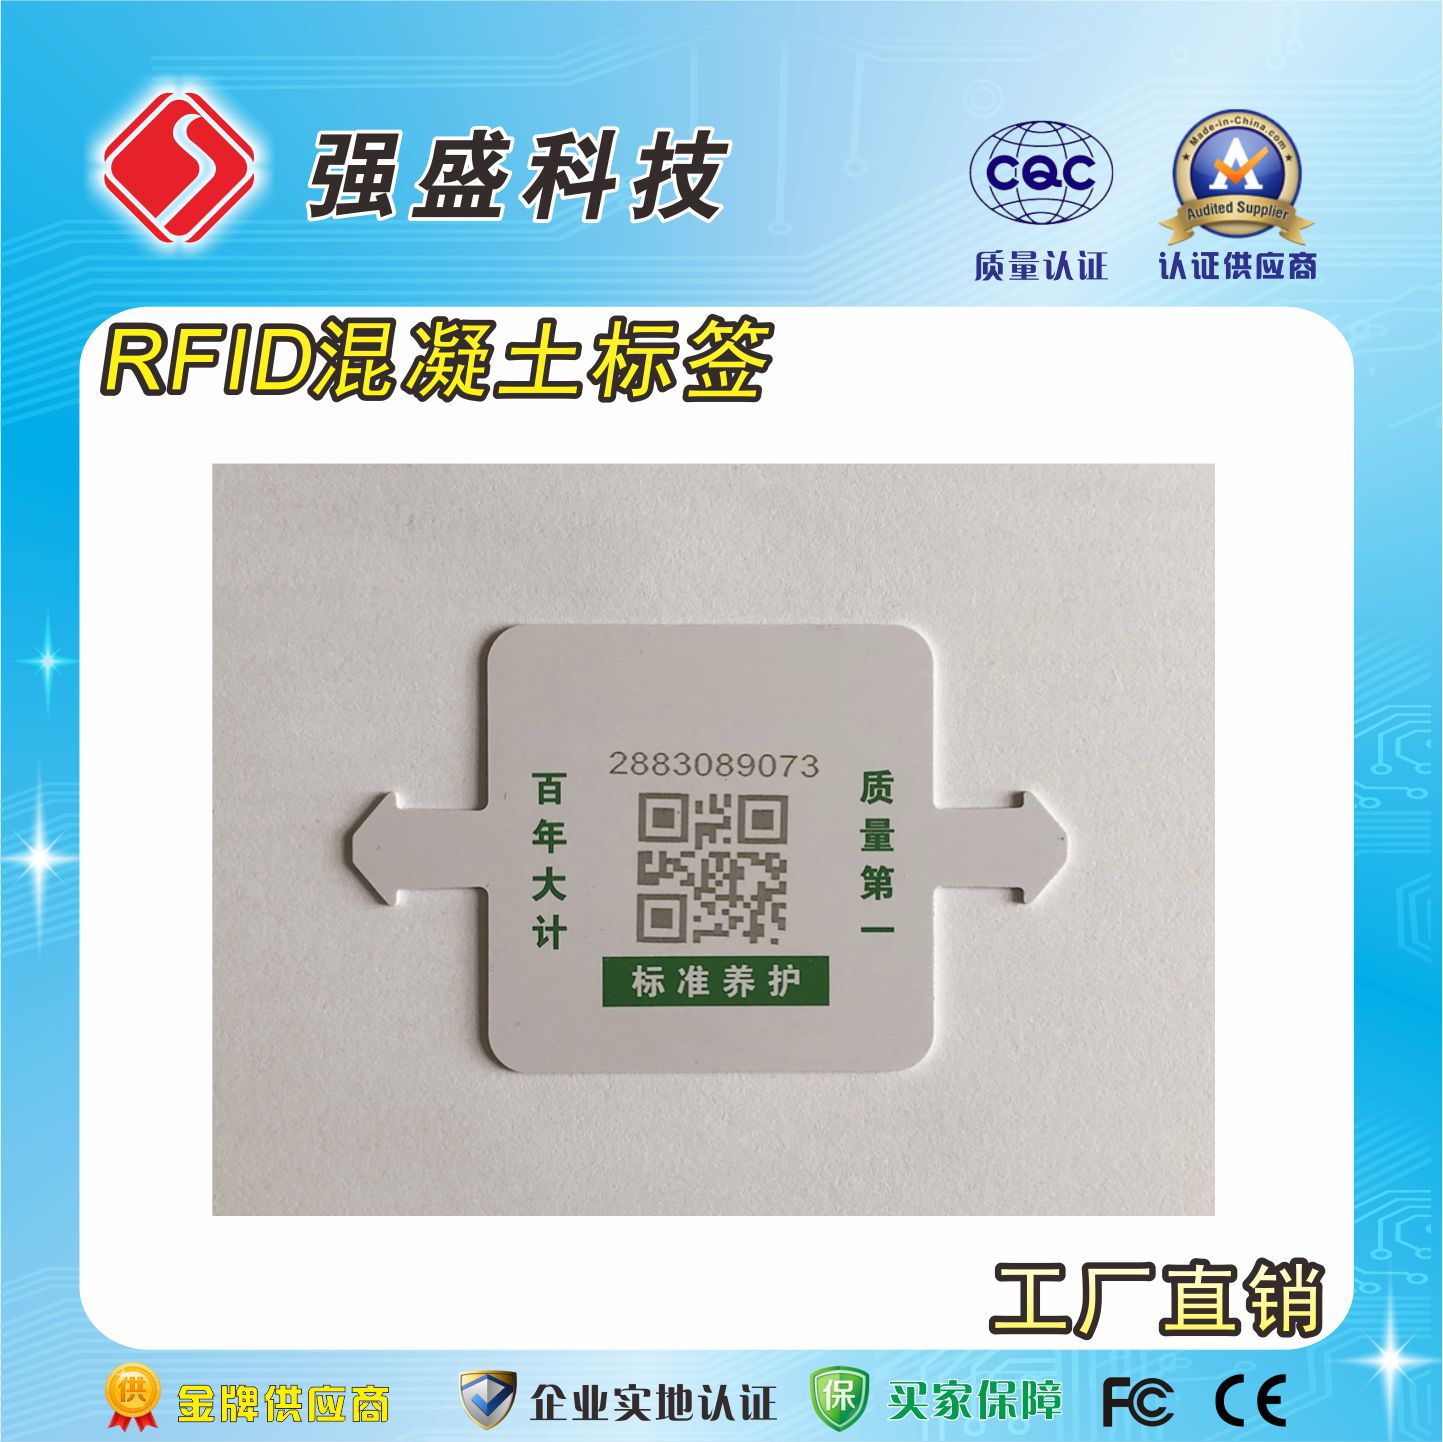 RFID混凝土电子标签价格 广州混凝土试块植入芯片供应商 水泥植入电子标签厂家4